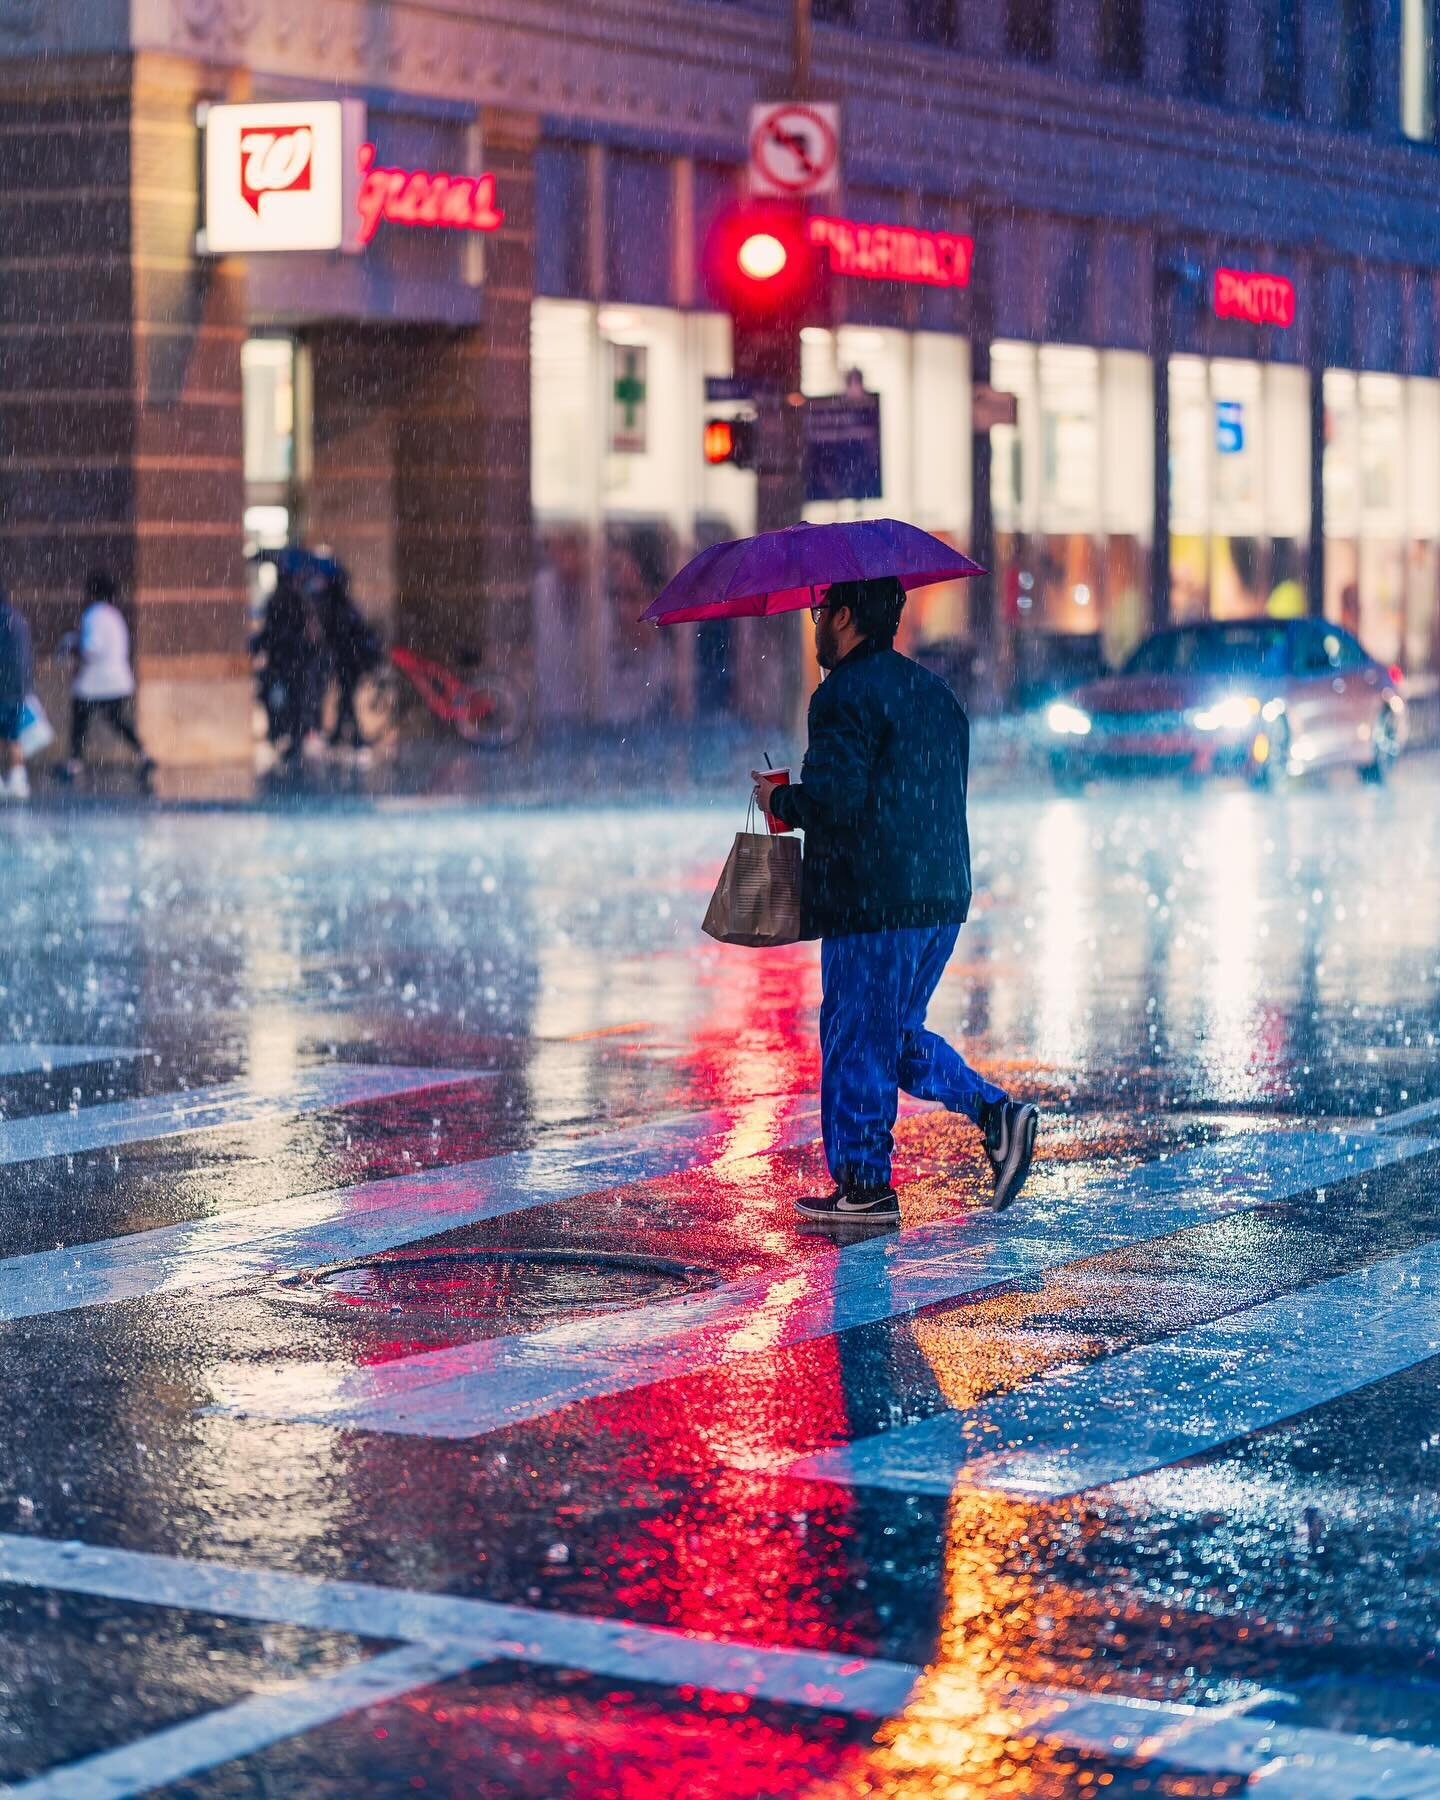 Night in the rain.

Camera: Sony A7Riii @sonyalpha
Lens: Sigma 85 mm f/1.4 @sigmauk

#losangelesphotographer
#streetphotography 
#creative_optic
#dof_addicts
#opticalwander 
#losangeles
#travelphotography
#rainstreets 
#moodyedits
#visualgrams

#mood